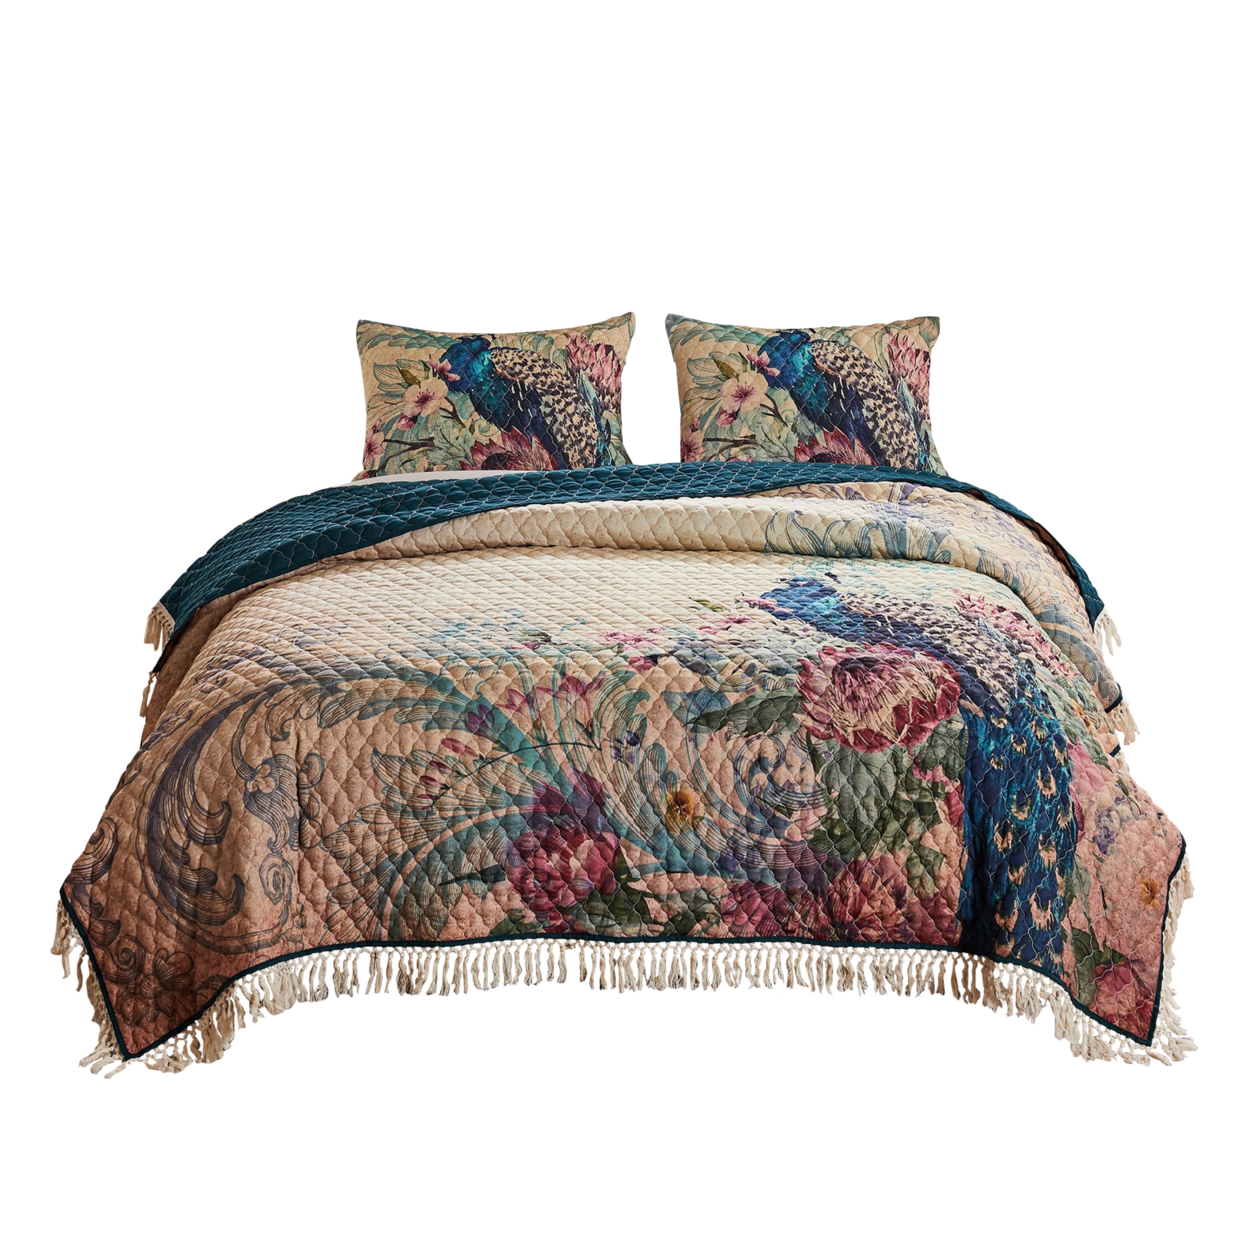 3 Piece Queen Size Quilt Set With Floral Print And Crochet Trim, Multicolor- Saltoro Sherpi